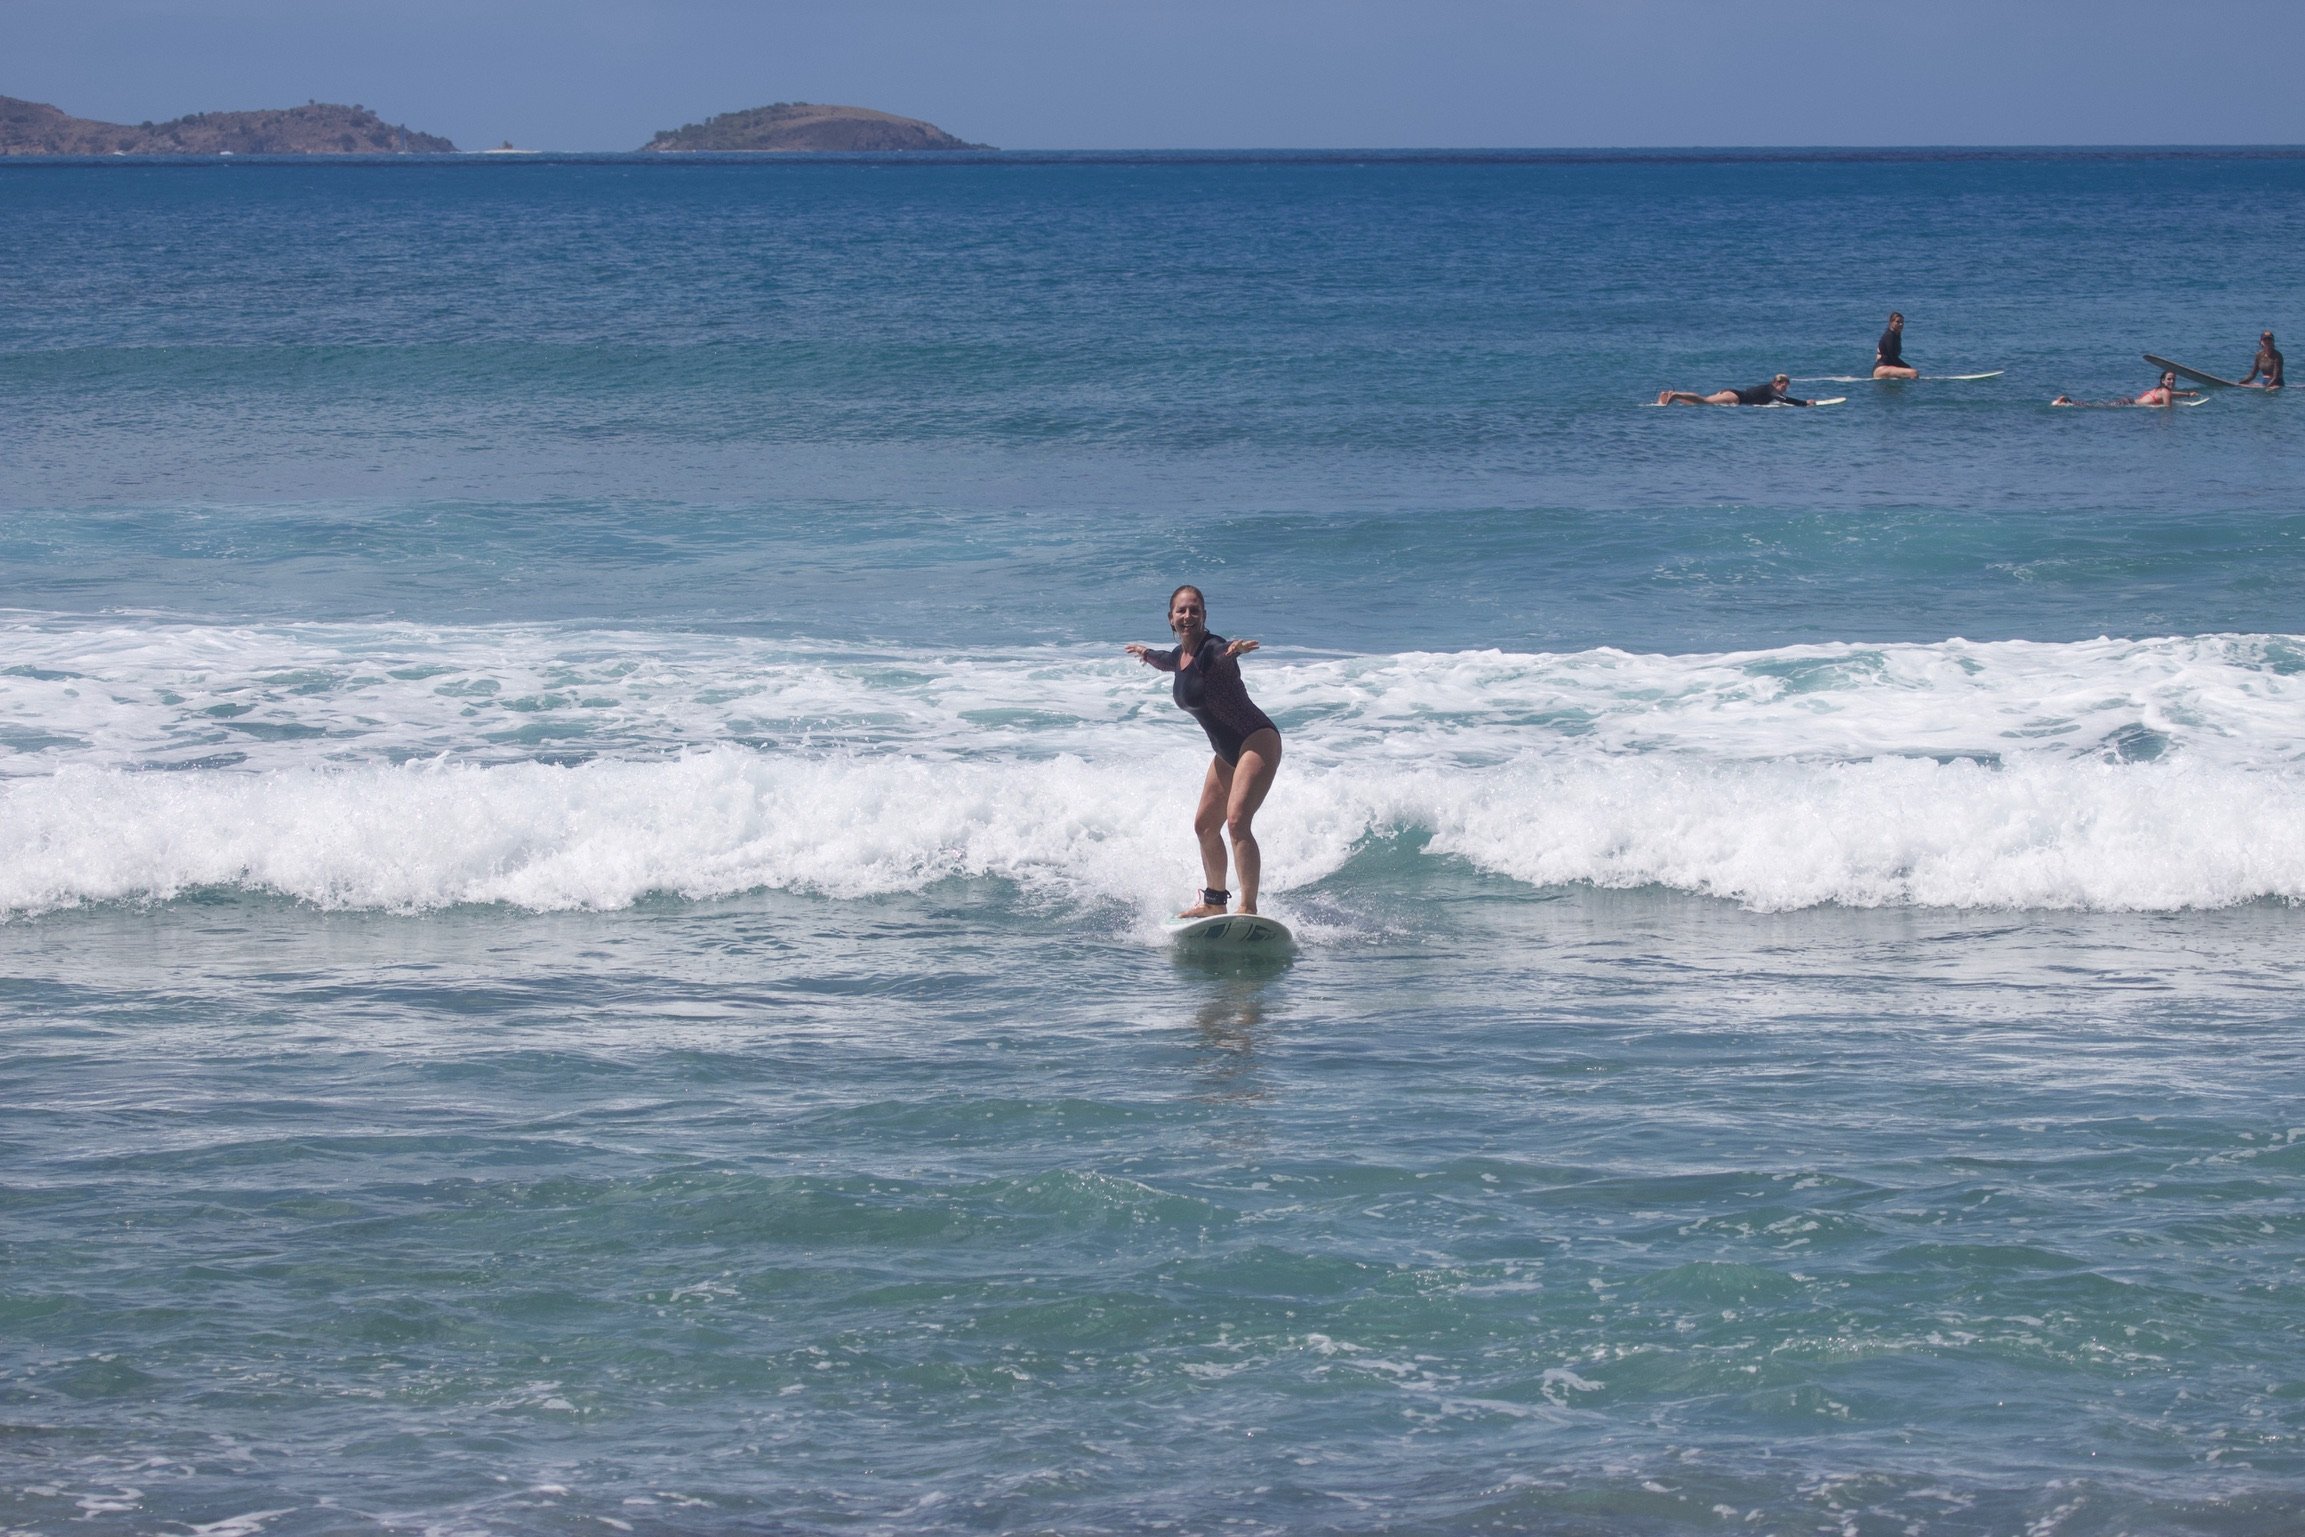 Women's Surf and Yoga Retreats